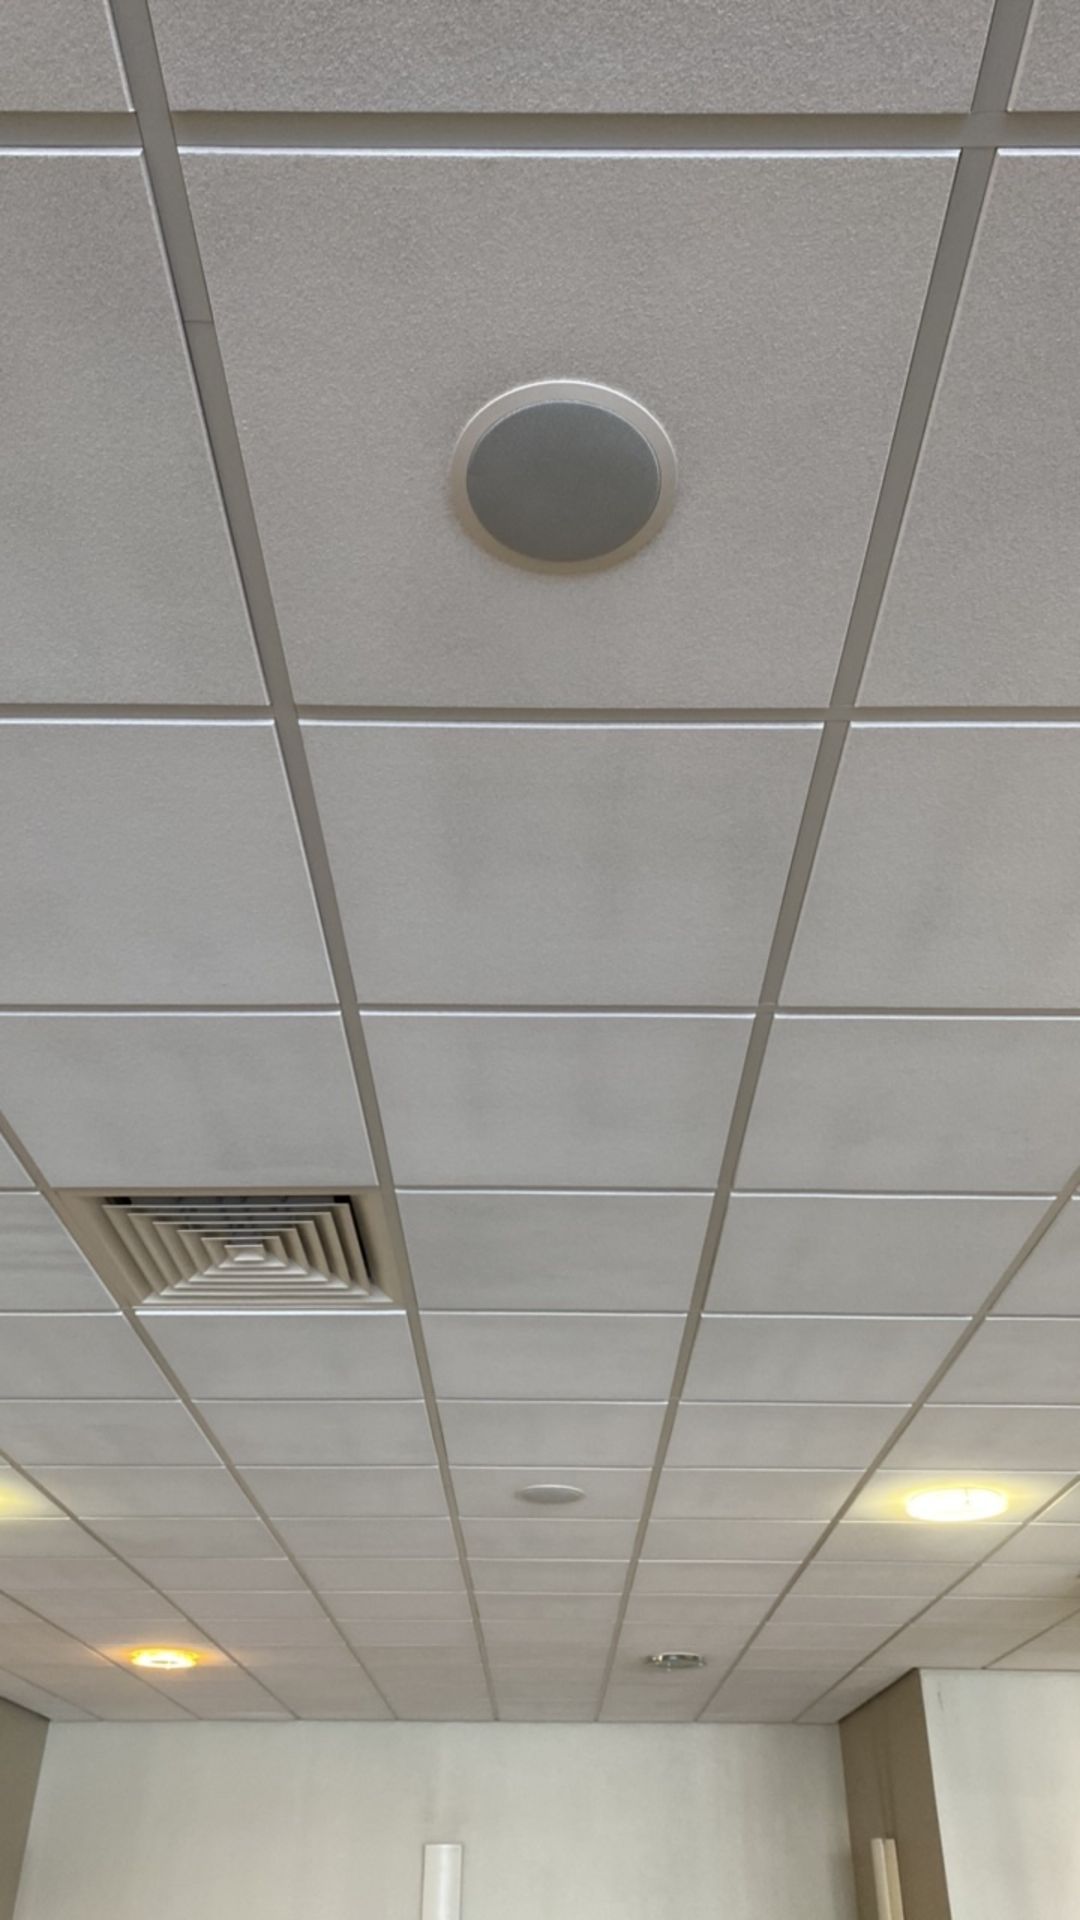 Ceiling Speaker X6 - Image 2 of 3